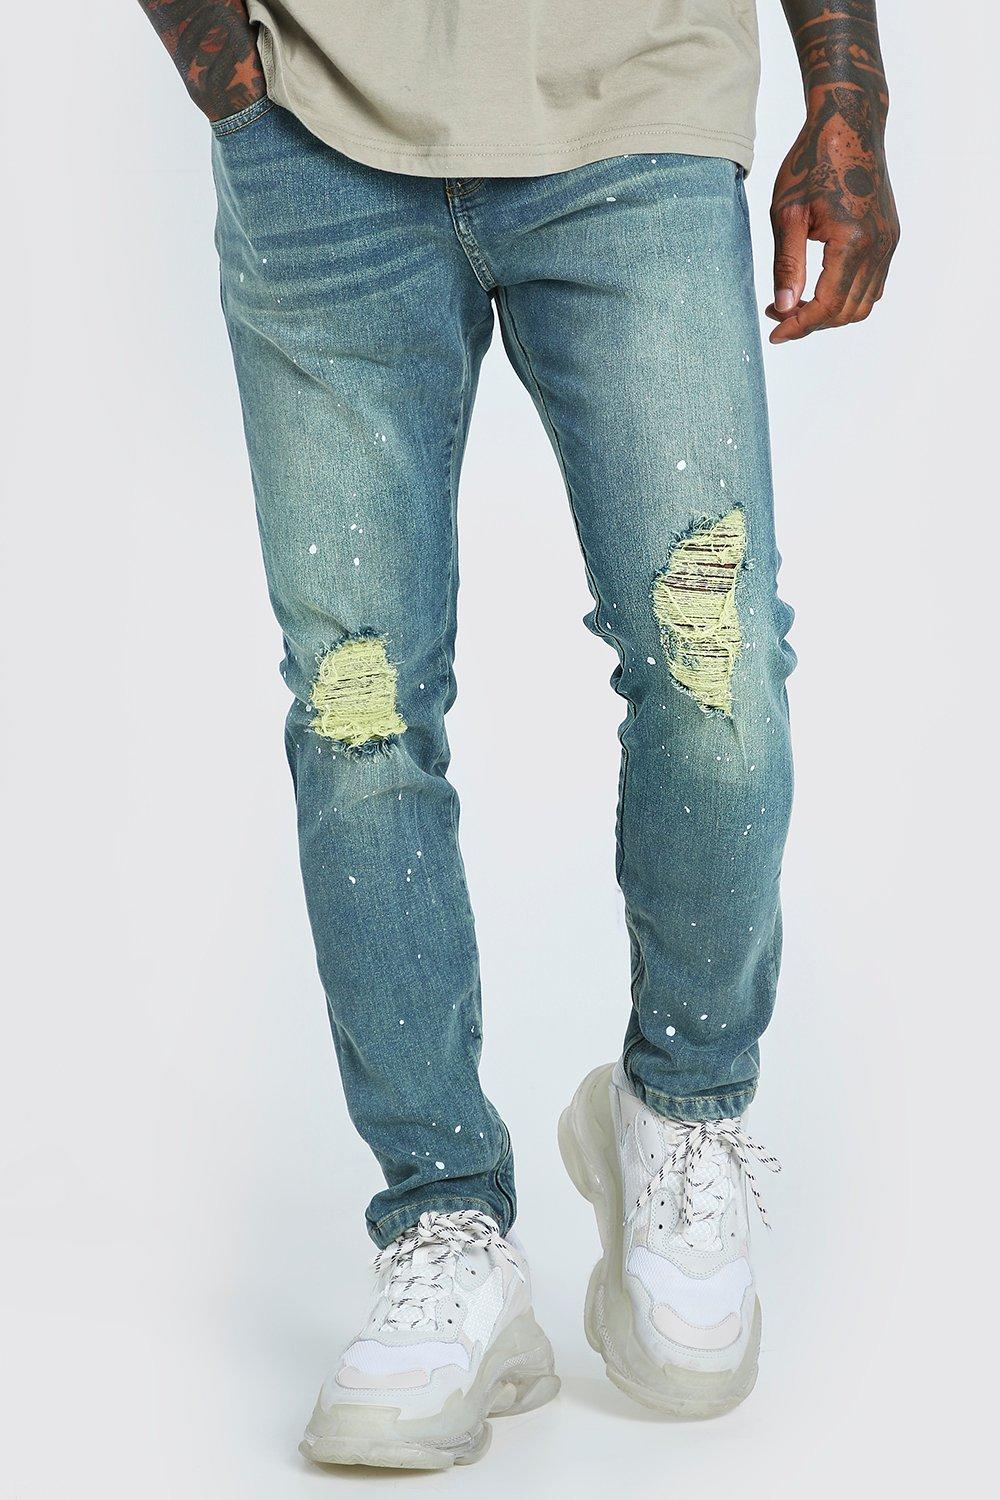 boohoo mens jeans